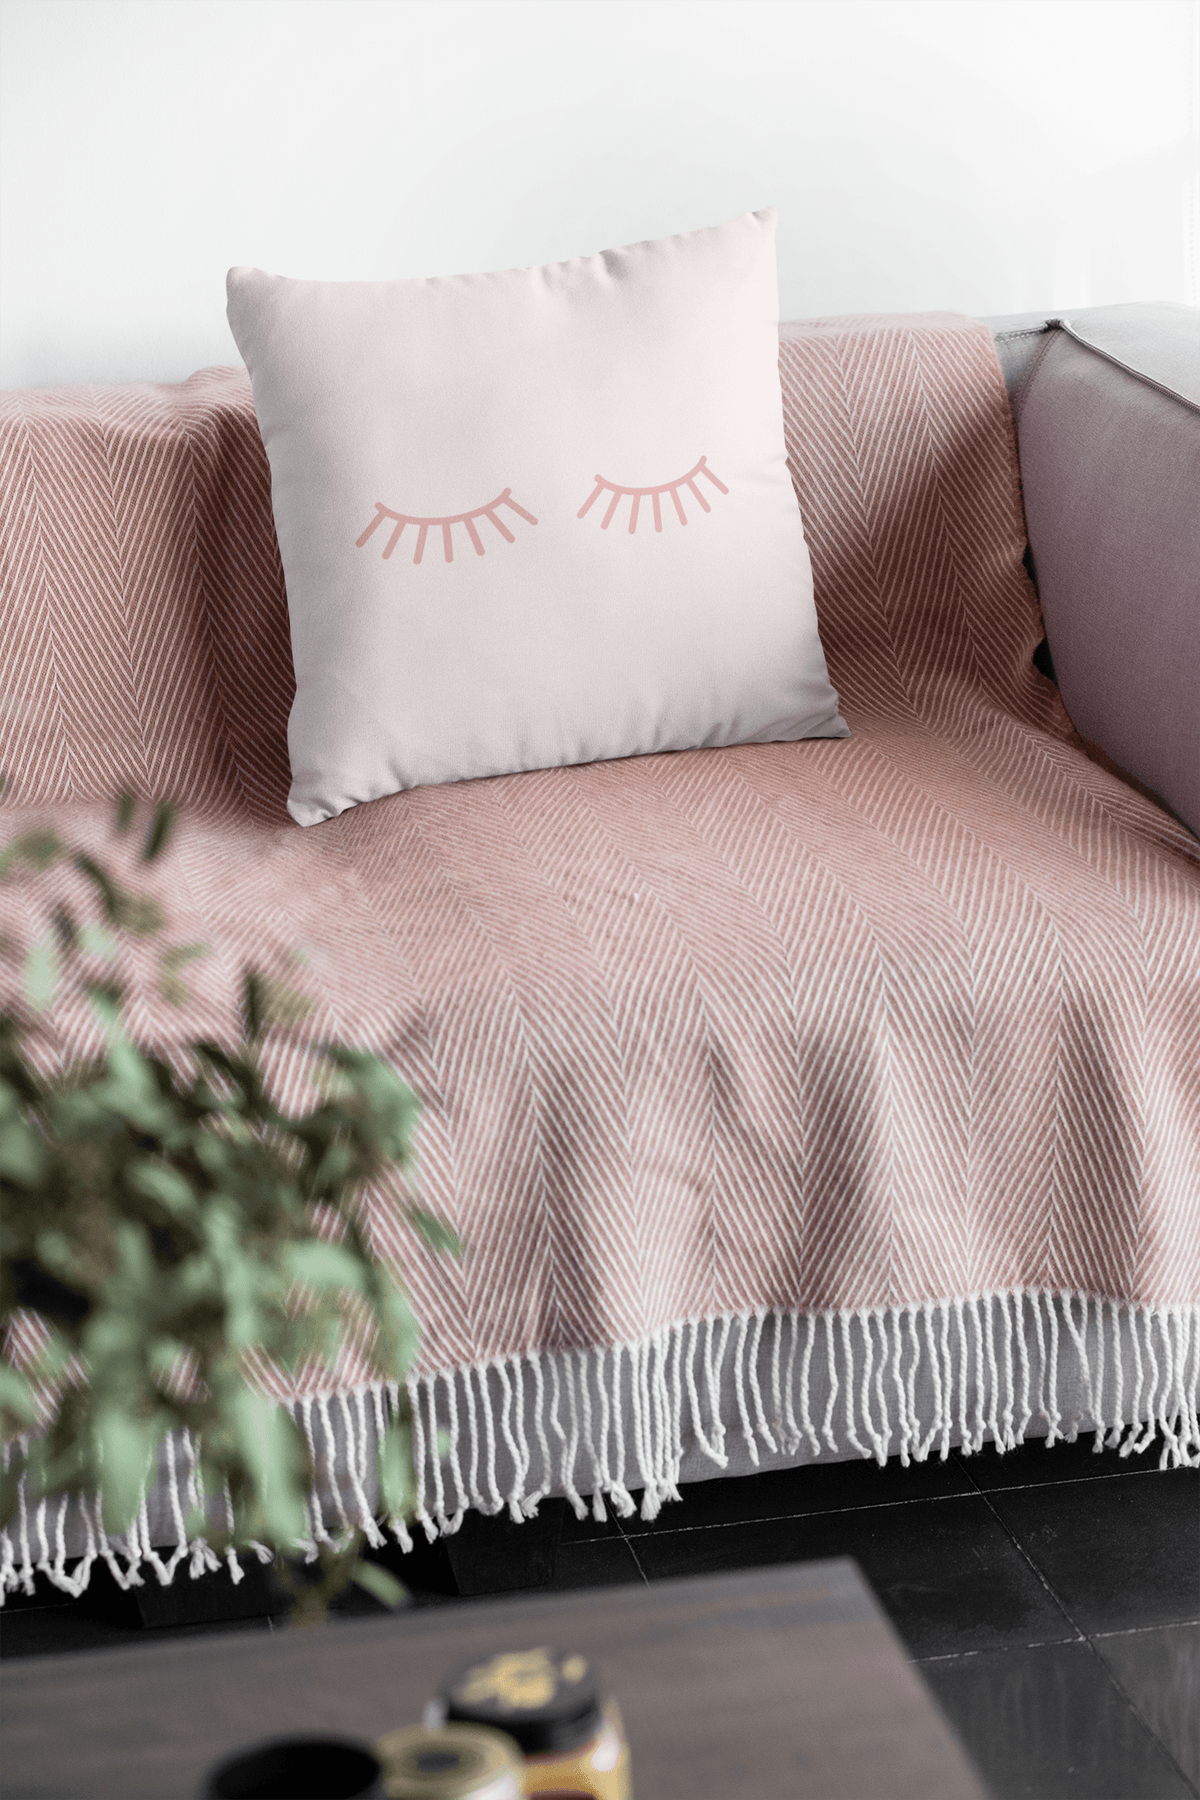 Pillows - Dorm Room Pillow - Pink Eyelashes